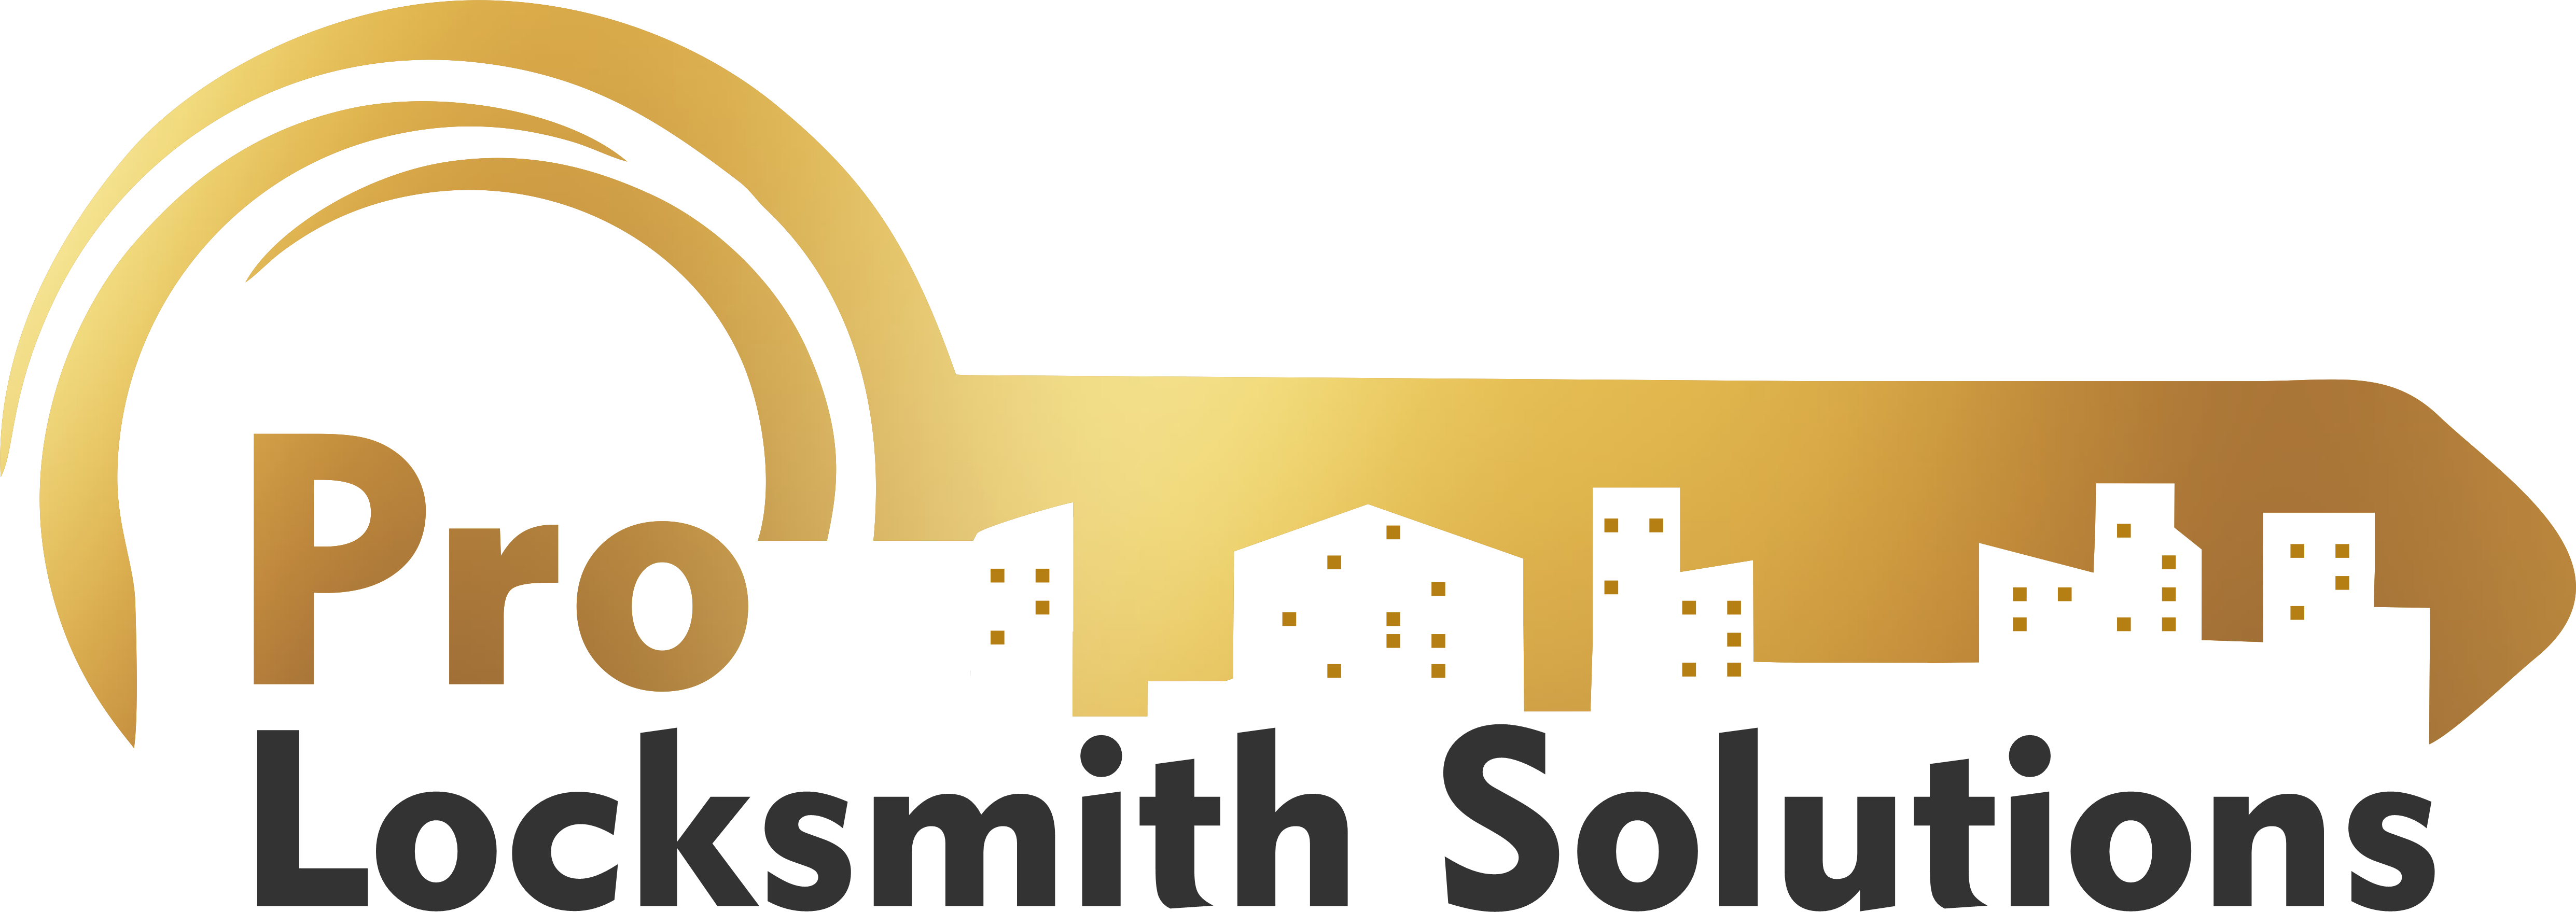 Pro Locksmith Solutions, LLC Logo